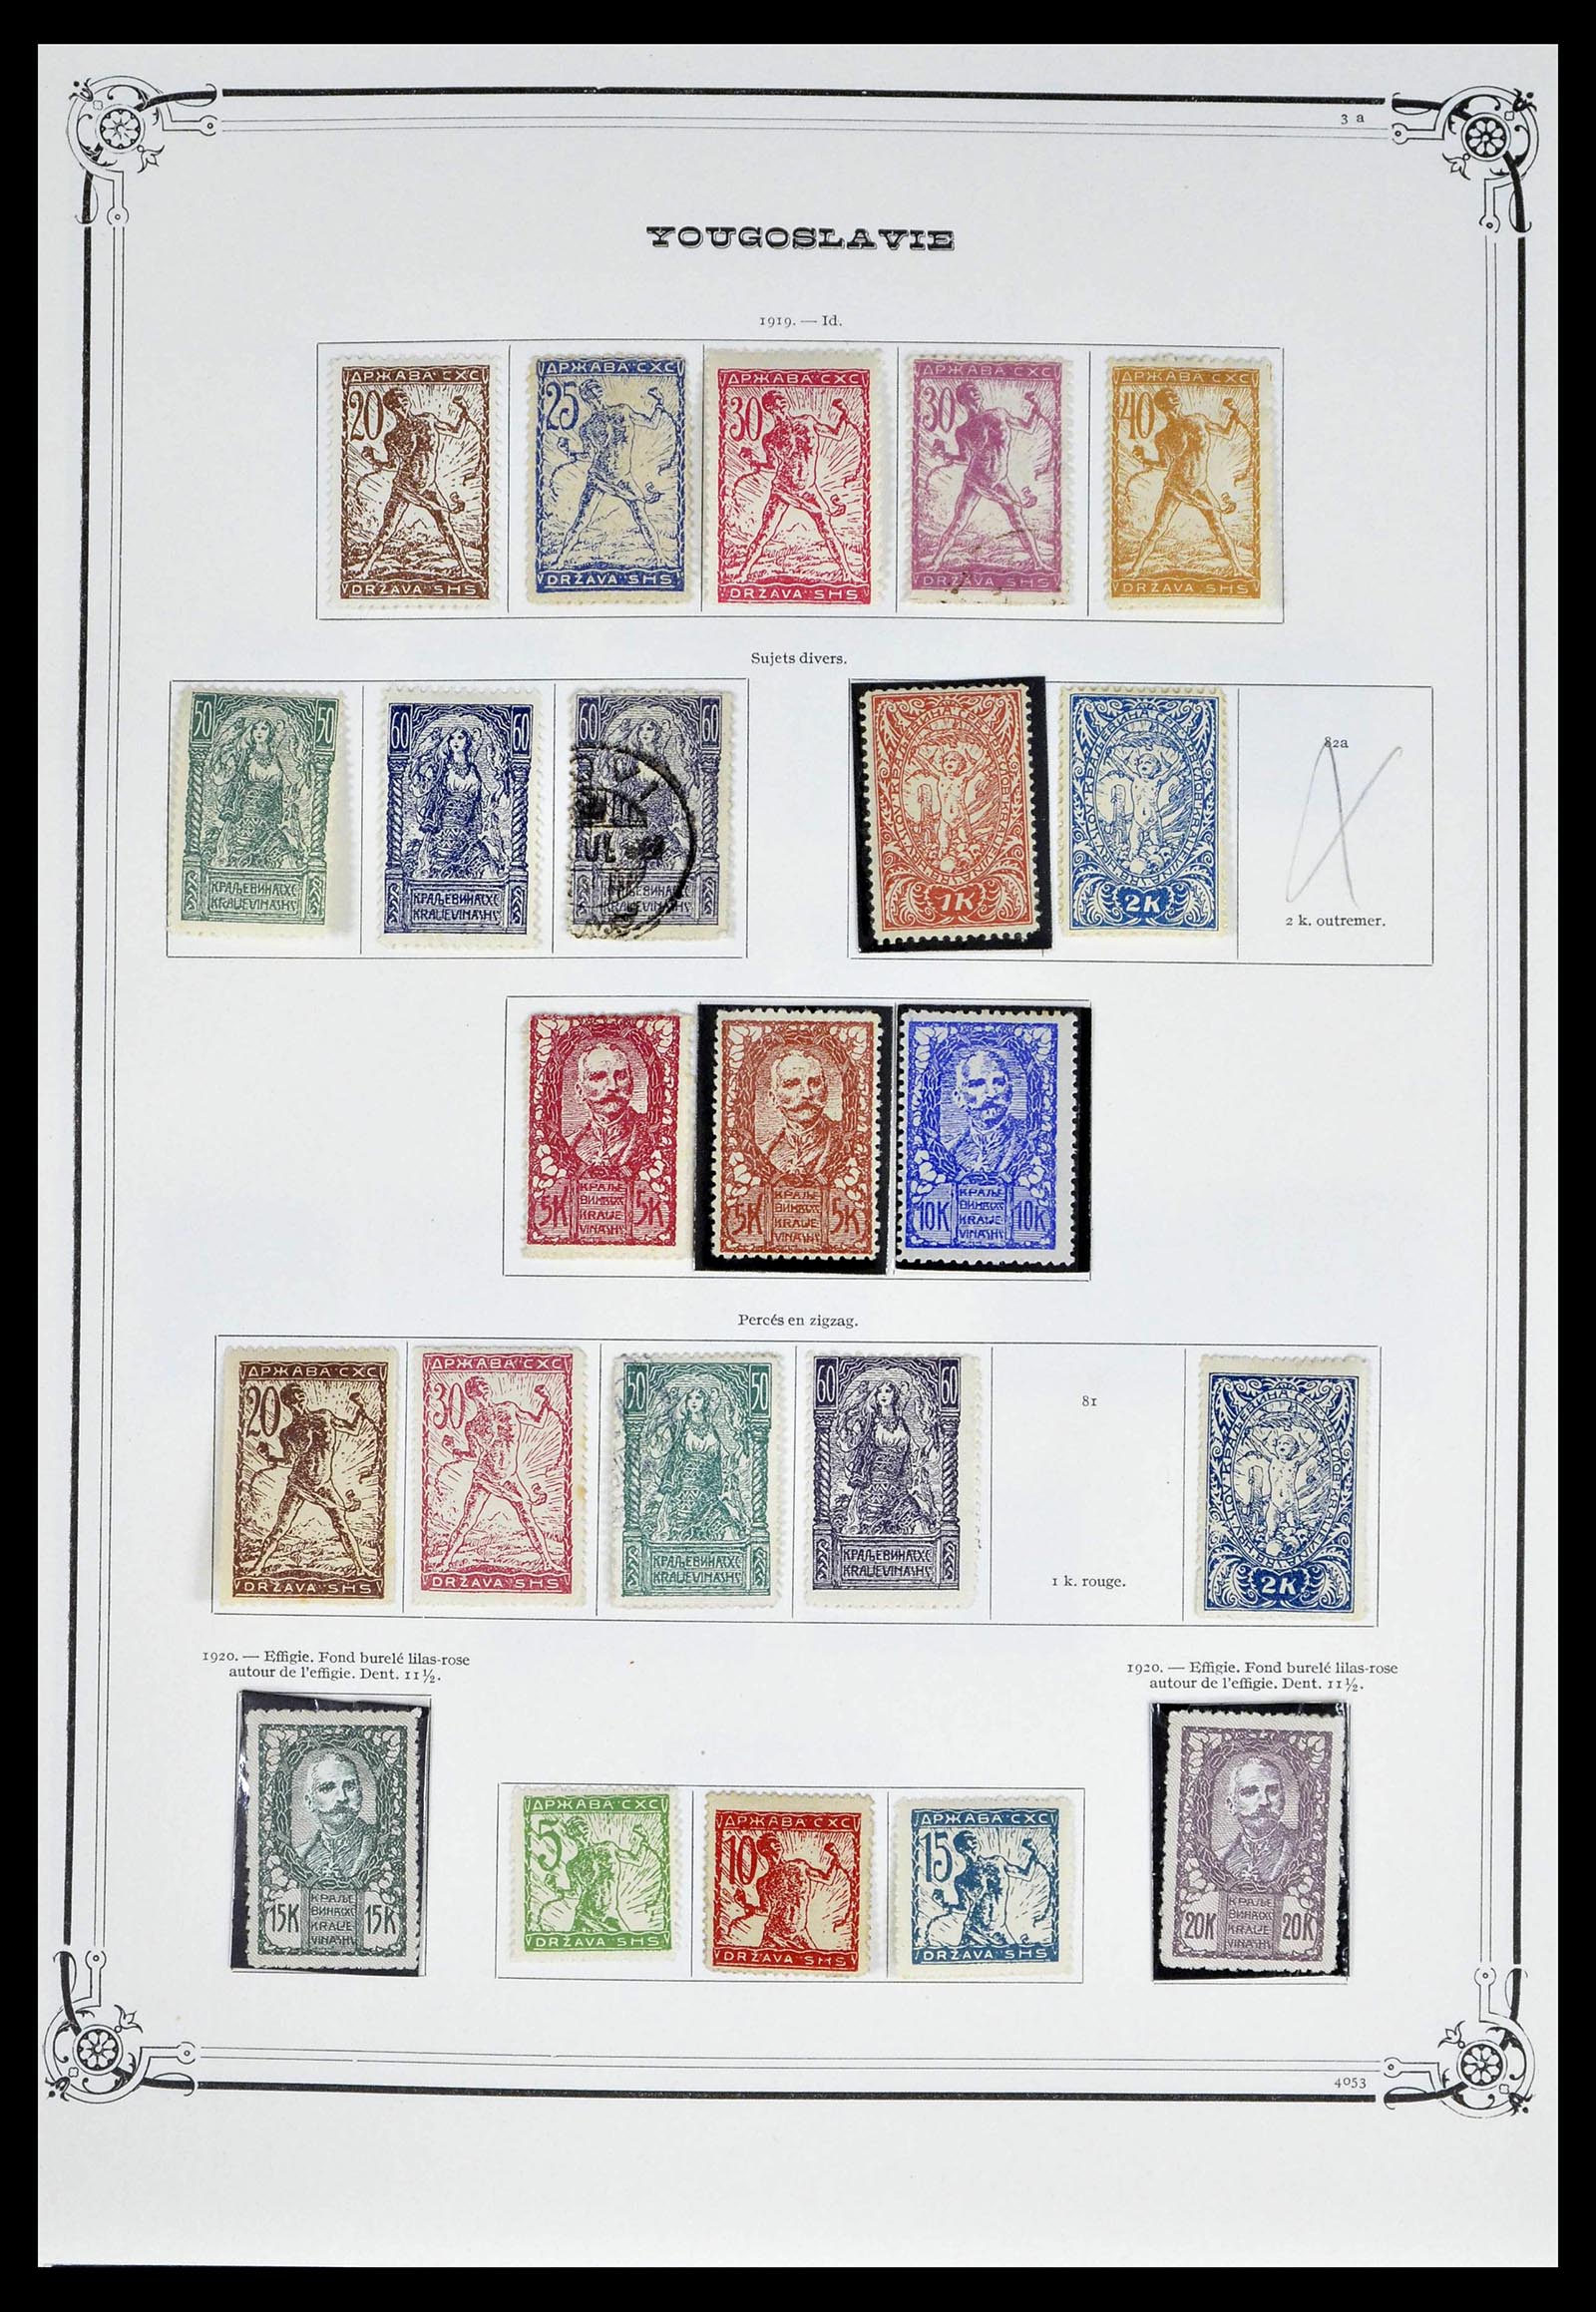 39294 0004 - Stamp collection 39294 Yugoslavia 1918-1941.